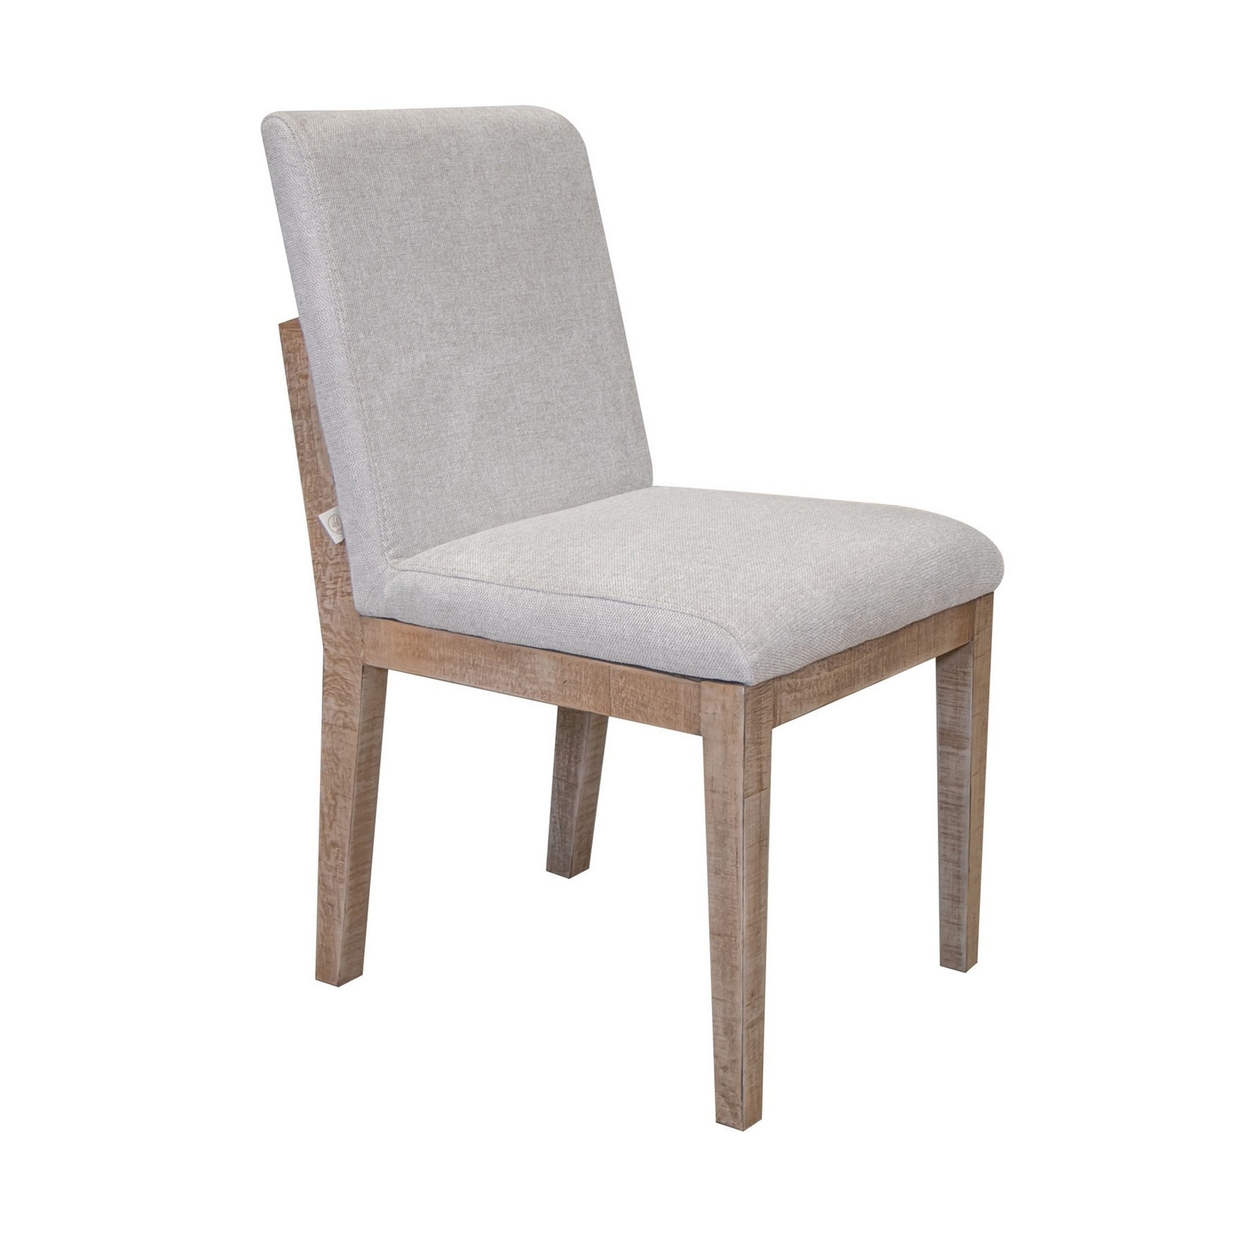 Genie 23 Inch Dining Chair Set Of 2, Pine Wood, Ivory Fabric, Brown Frame - Saltoro Sherpi